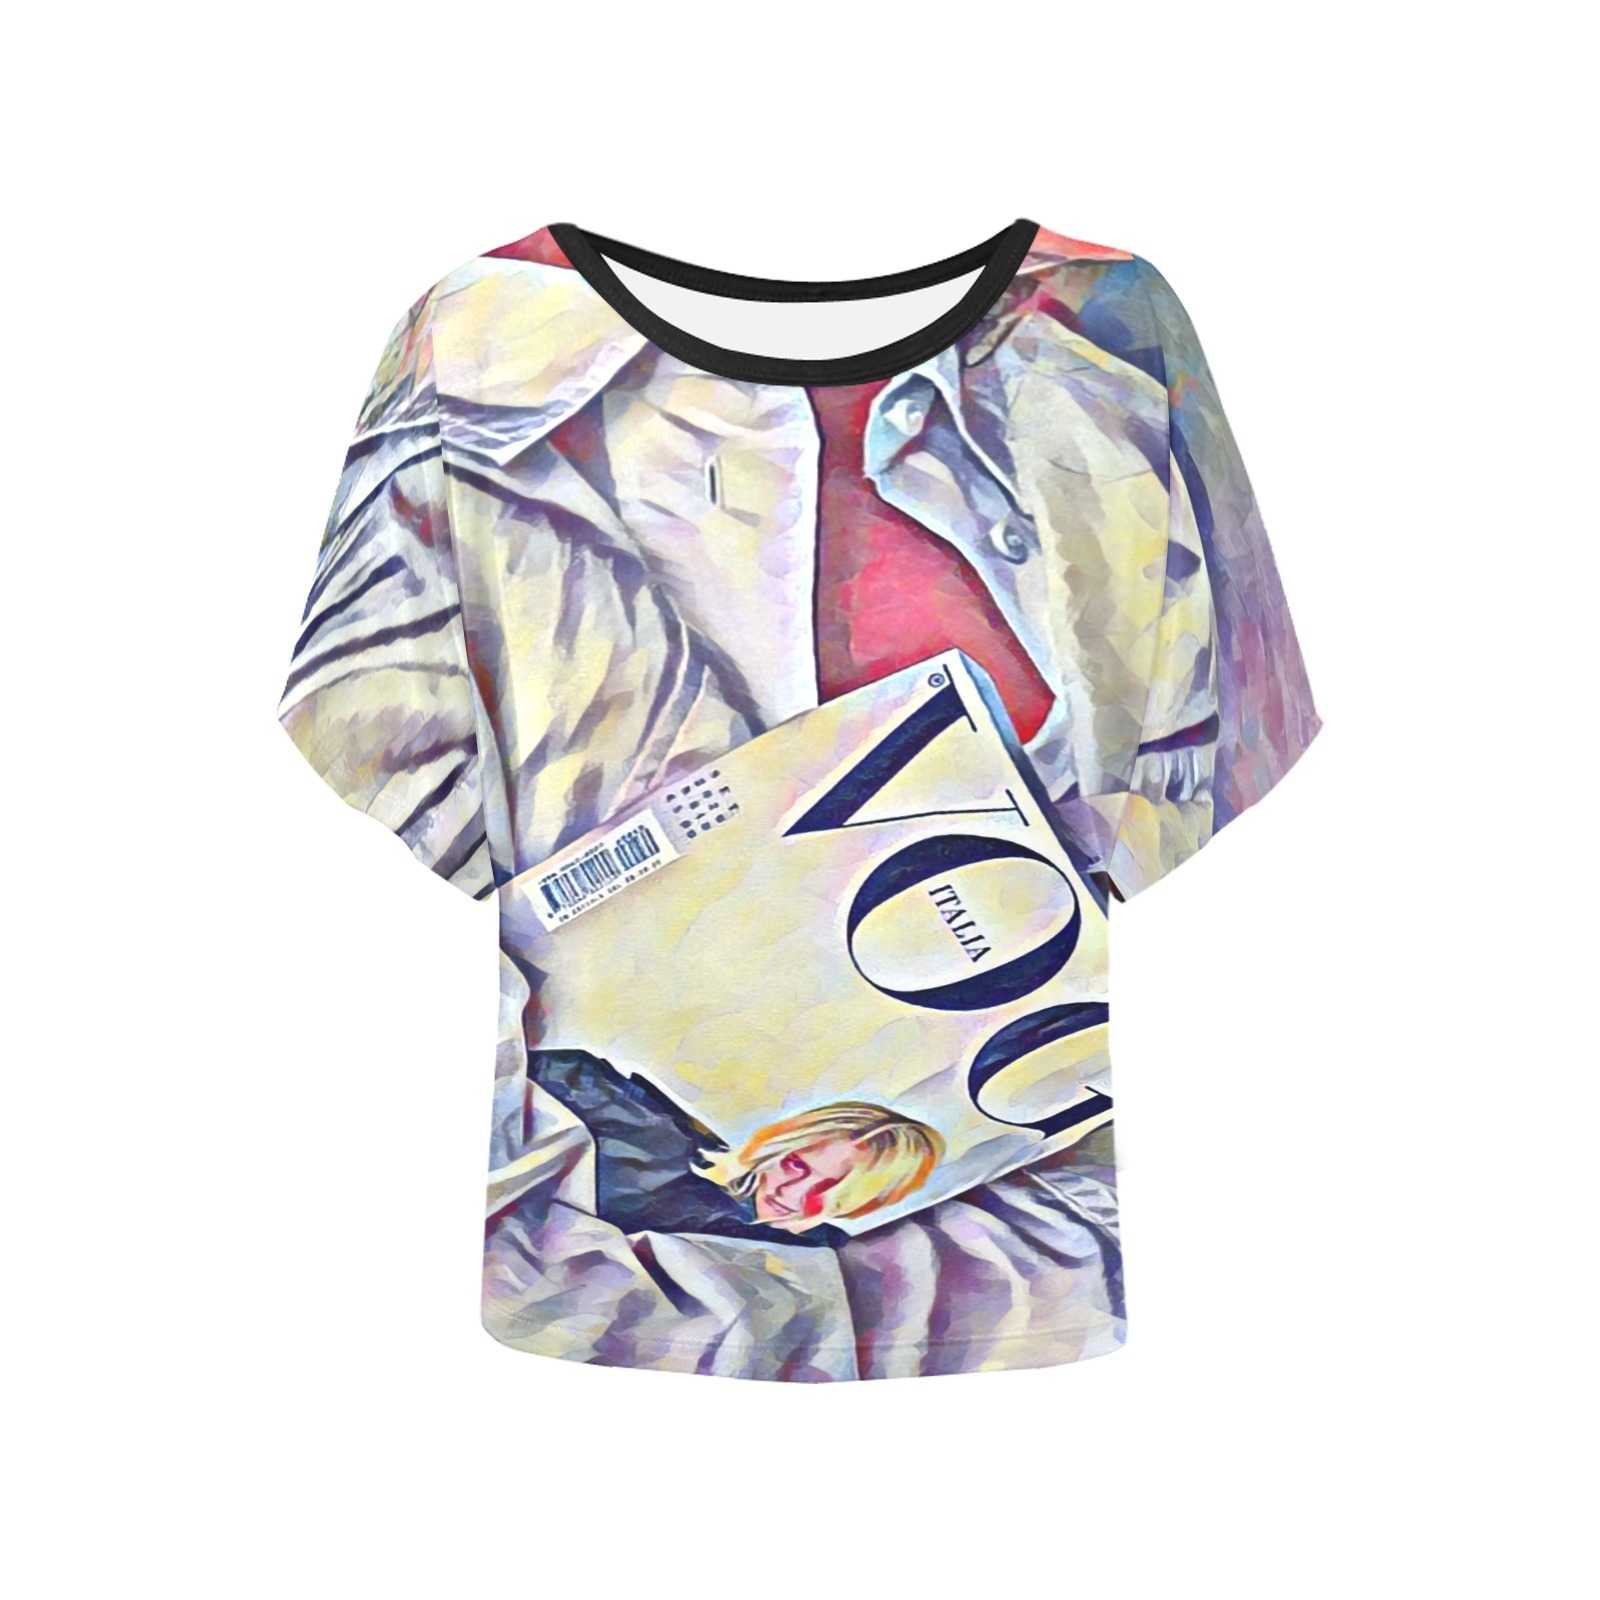 42888 Women's Batwing-Sleeved Blouse T shirt (Model T44)